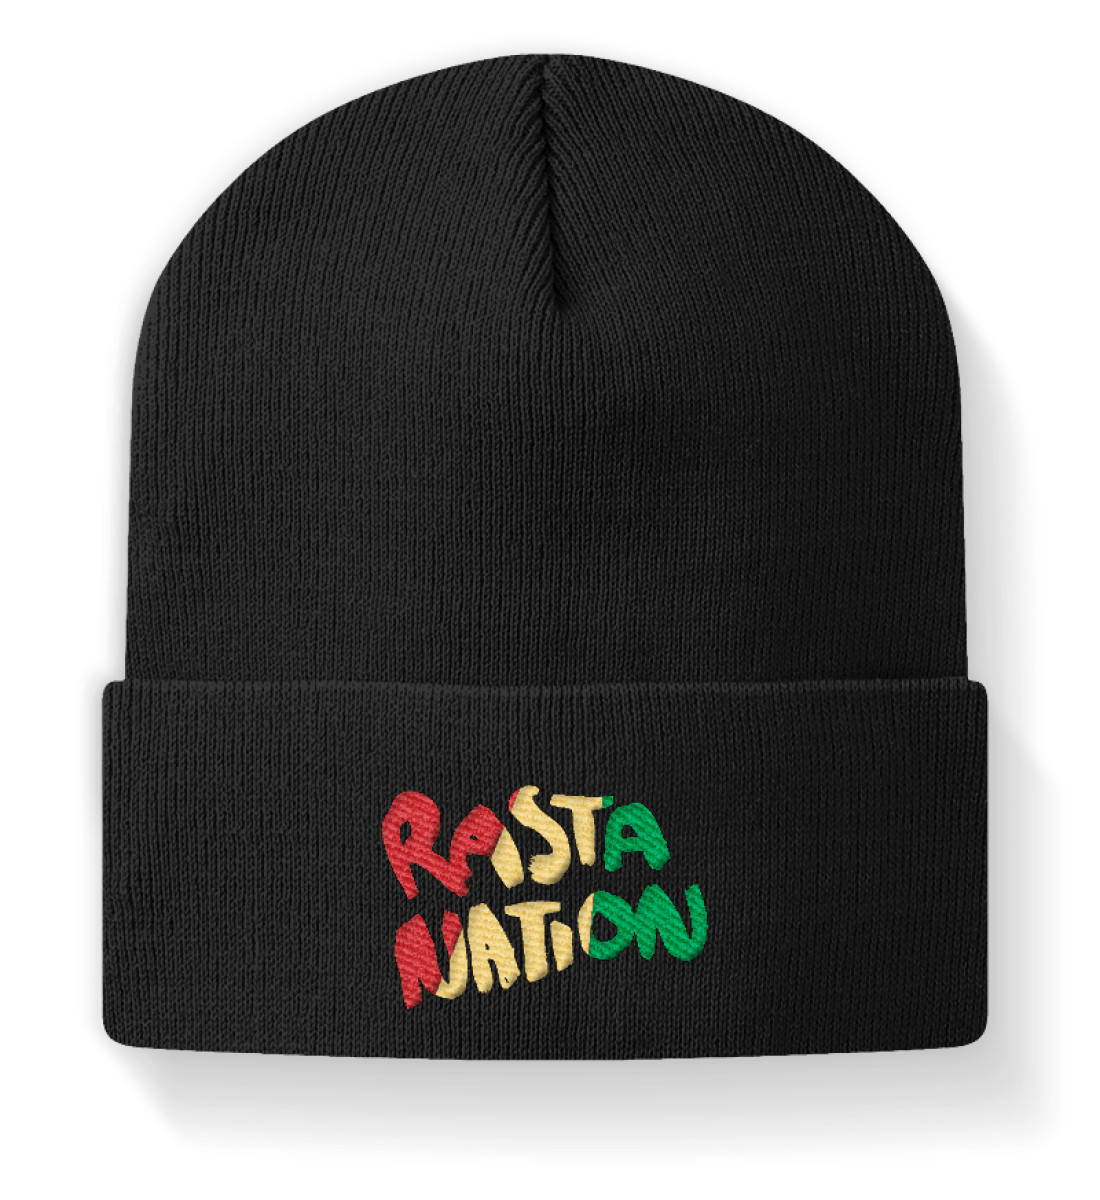 Gorro Rasta Nation Reggae Roots - Gorro-16